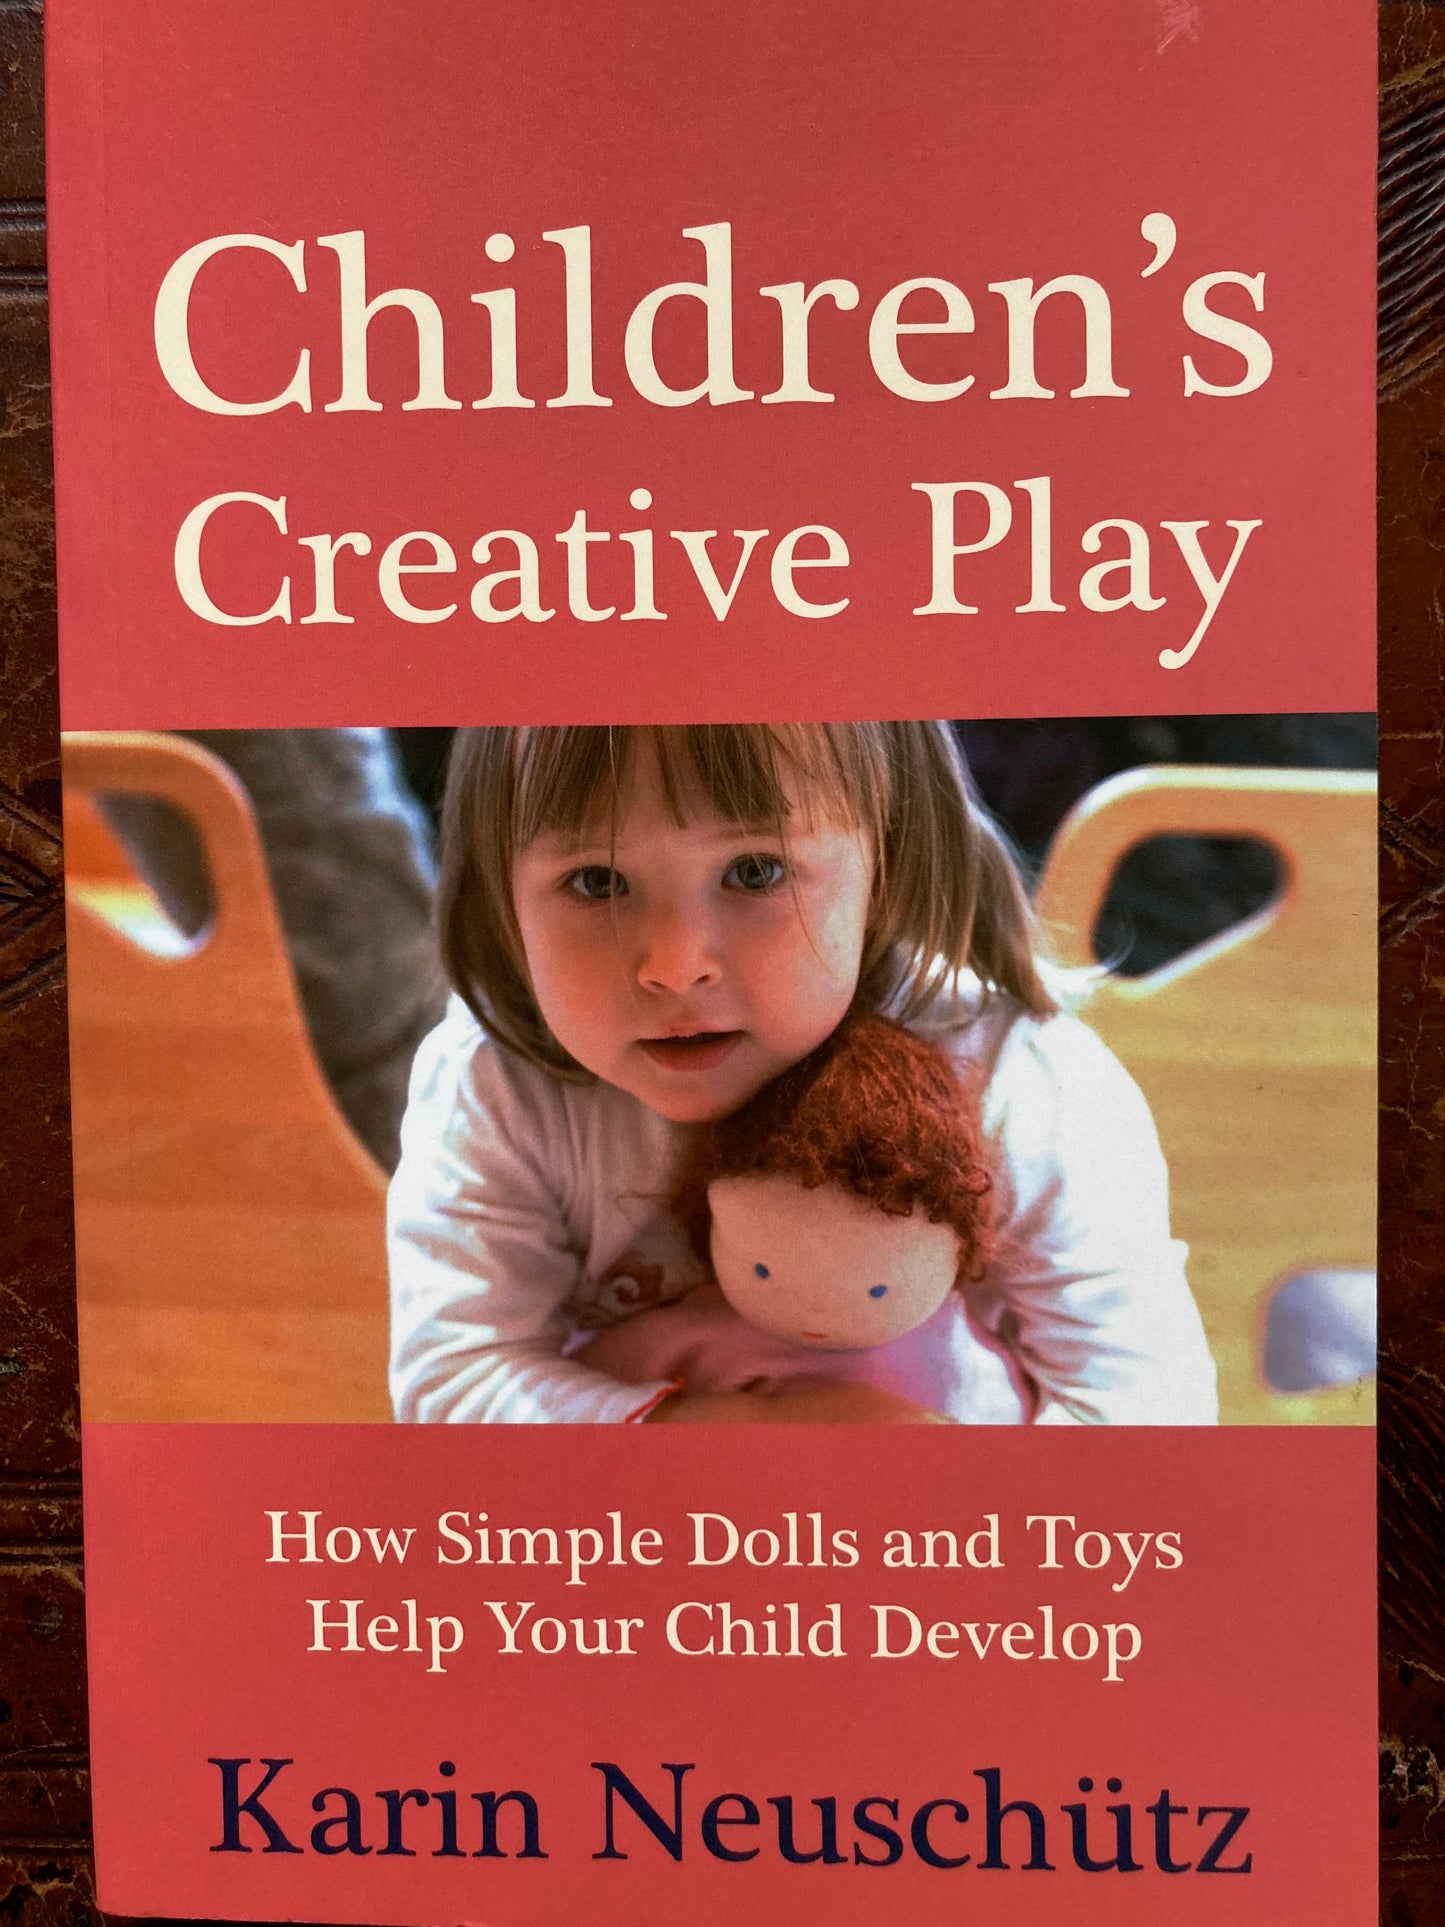 Parenting Resource Book - CHILDREN'S CREATIVE PLAY